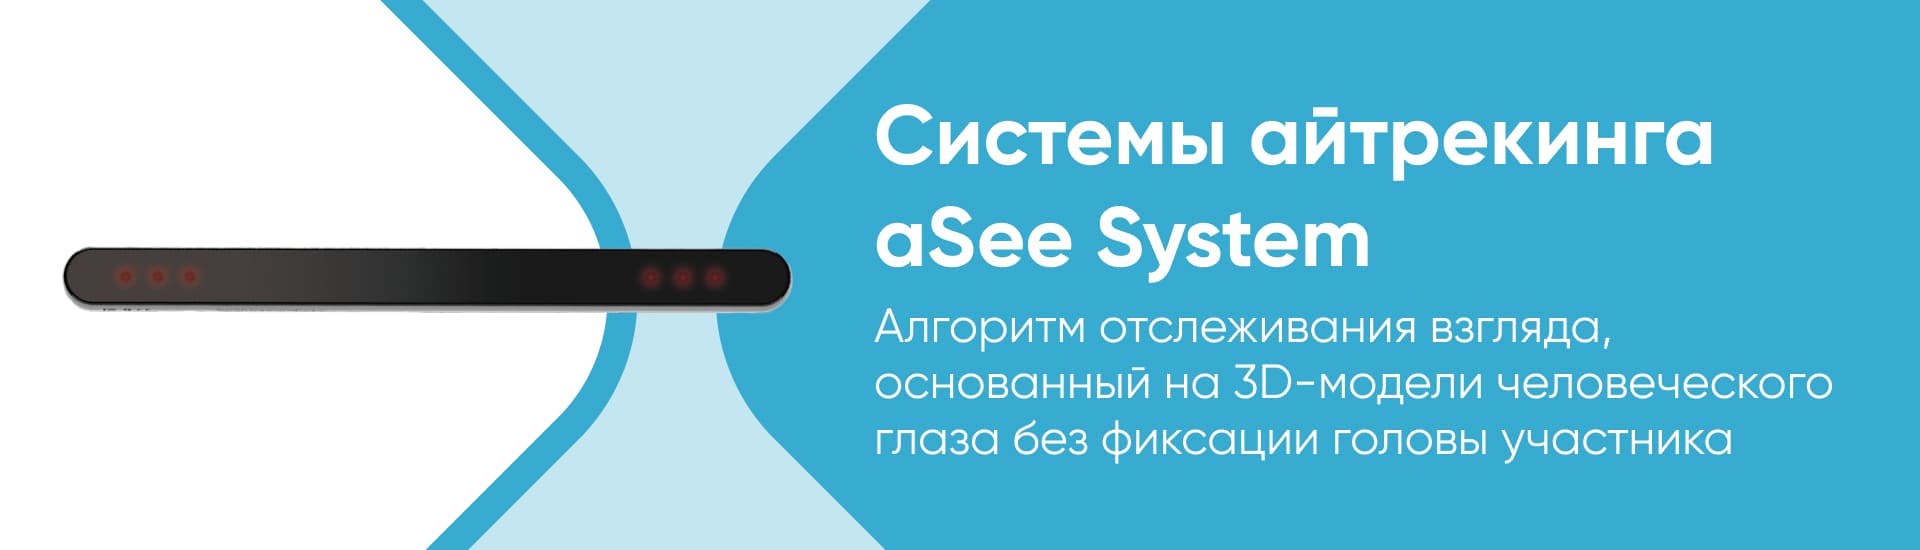 Системы айтрекинга aSee System